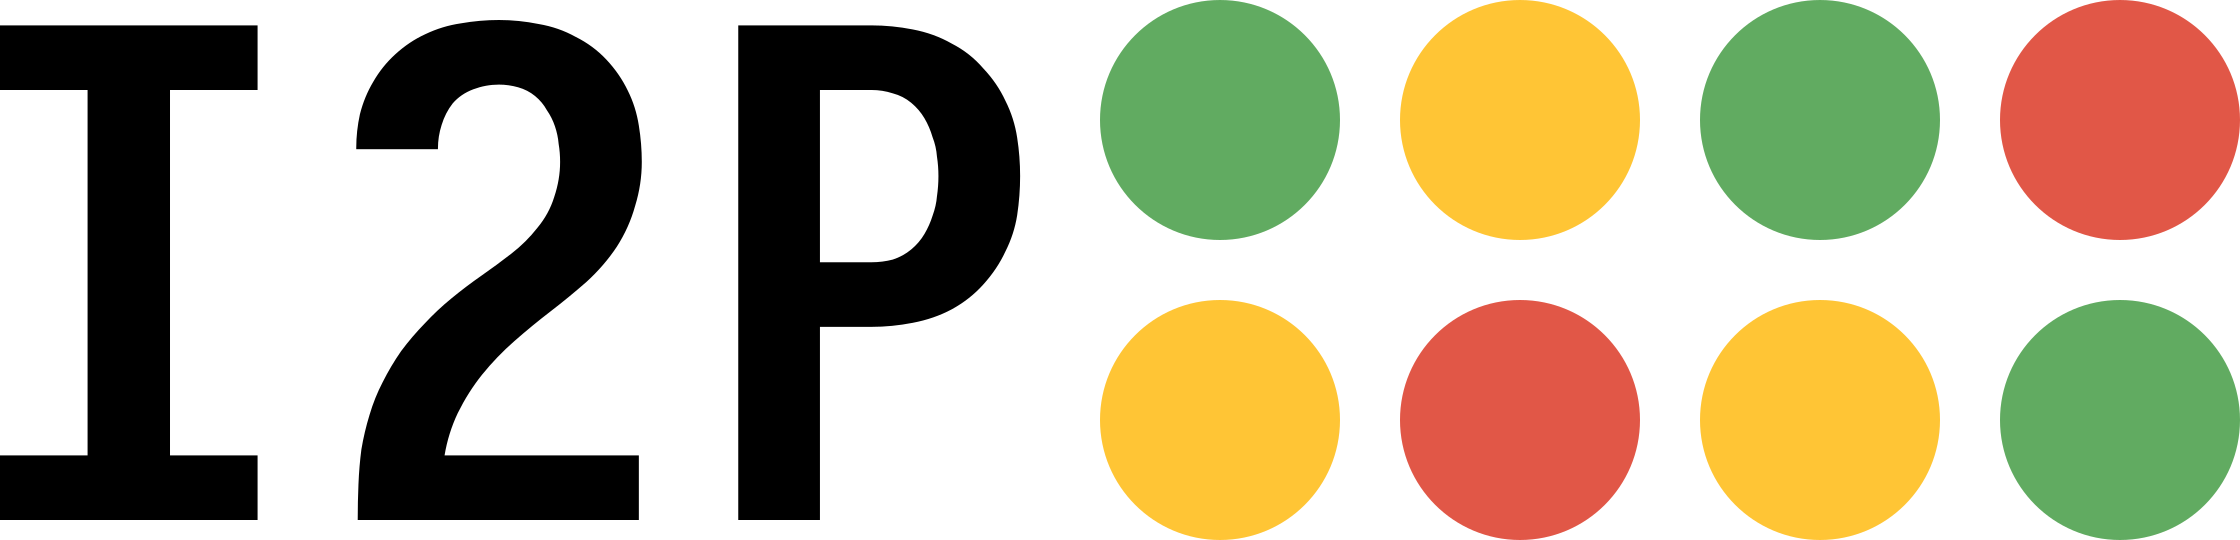 I2P logo by SimpleName